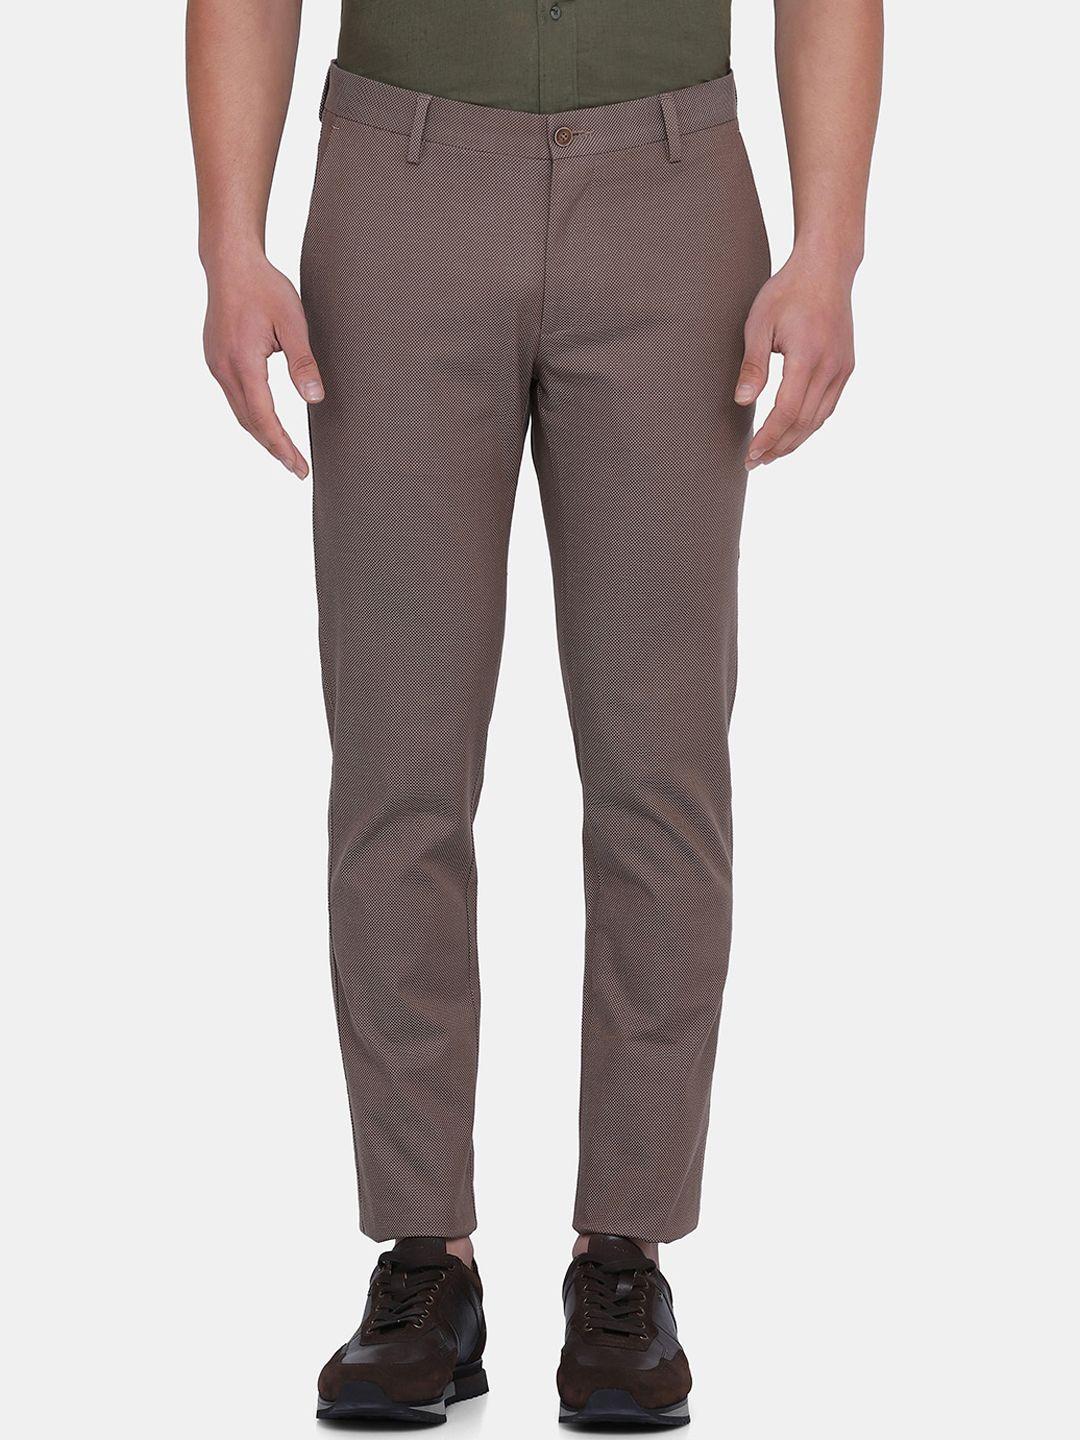 blackberrys-men-khaki-textured-arise-regular-fit-trousers